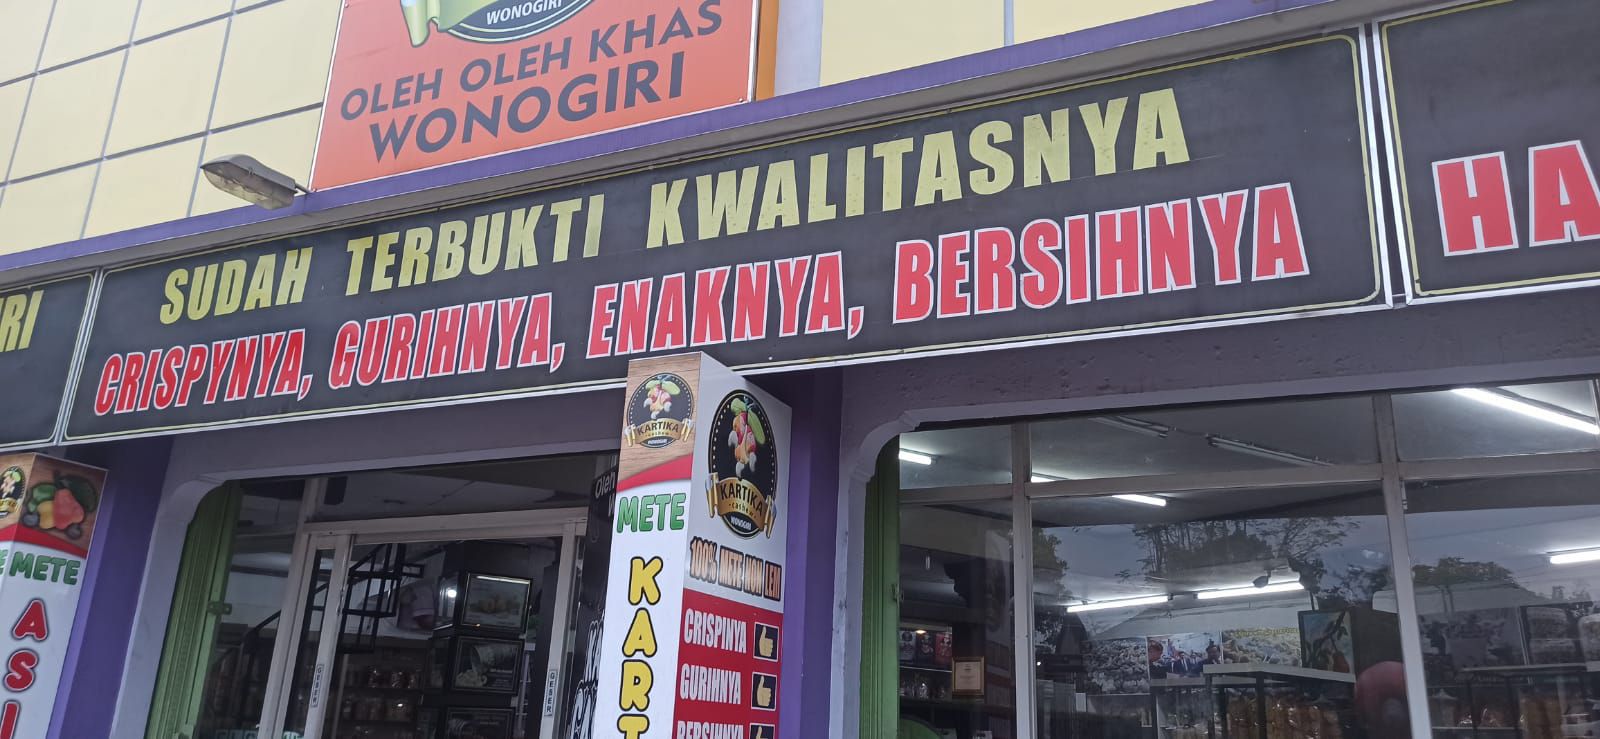 Kuliner Nusantara: Kartika Mete, Inovasi Varian Olahan Kacang Mete